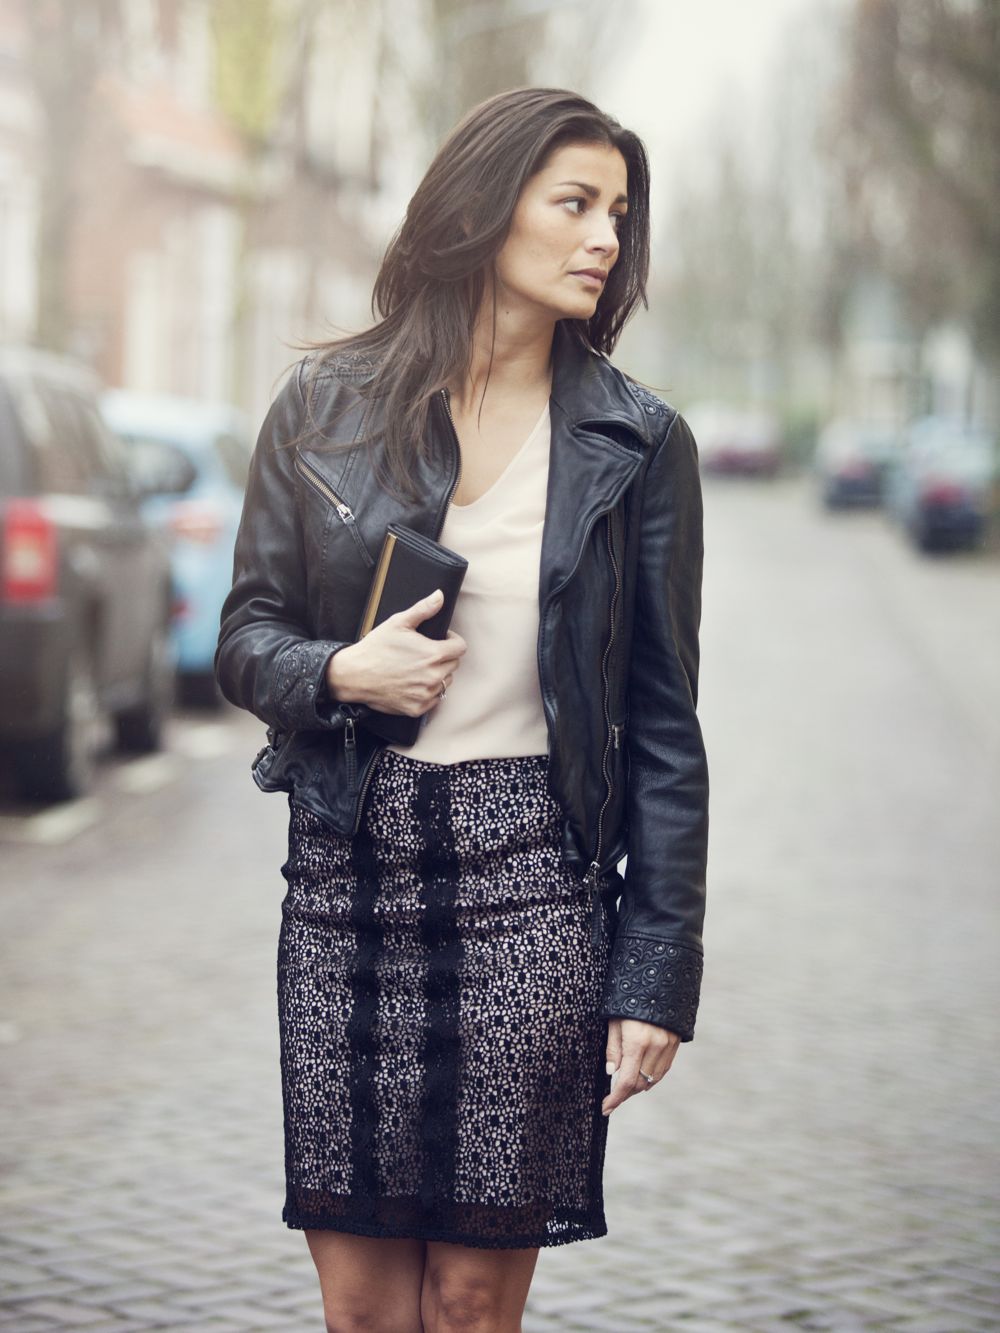 street fashion lace skirt with leather biker jacket BlogForShops.nl